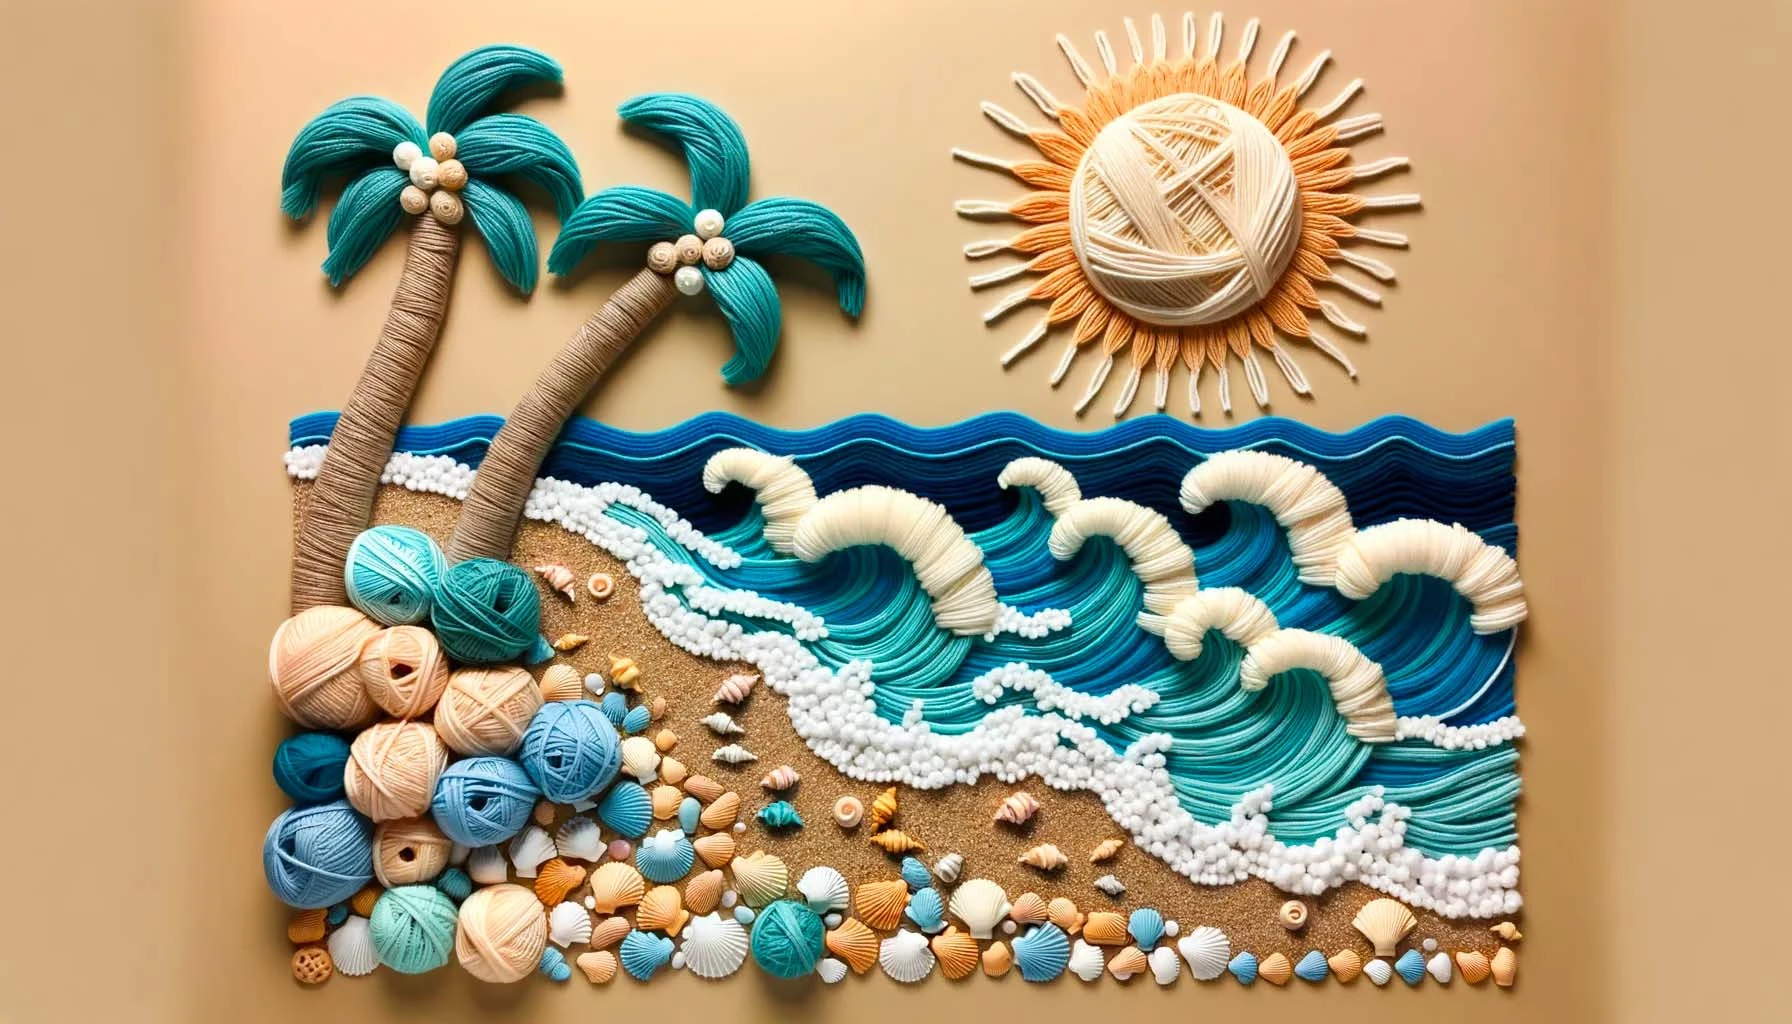 Artistic textile representation of a beach scene with deep blue and turquoise yarn waves, sandy yarn beach, and tan yarn palm trees under a white yarn sun.